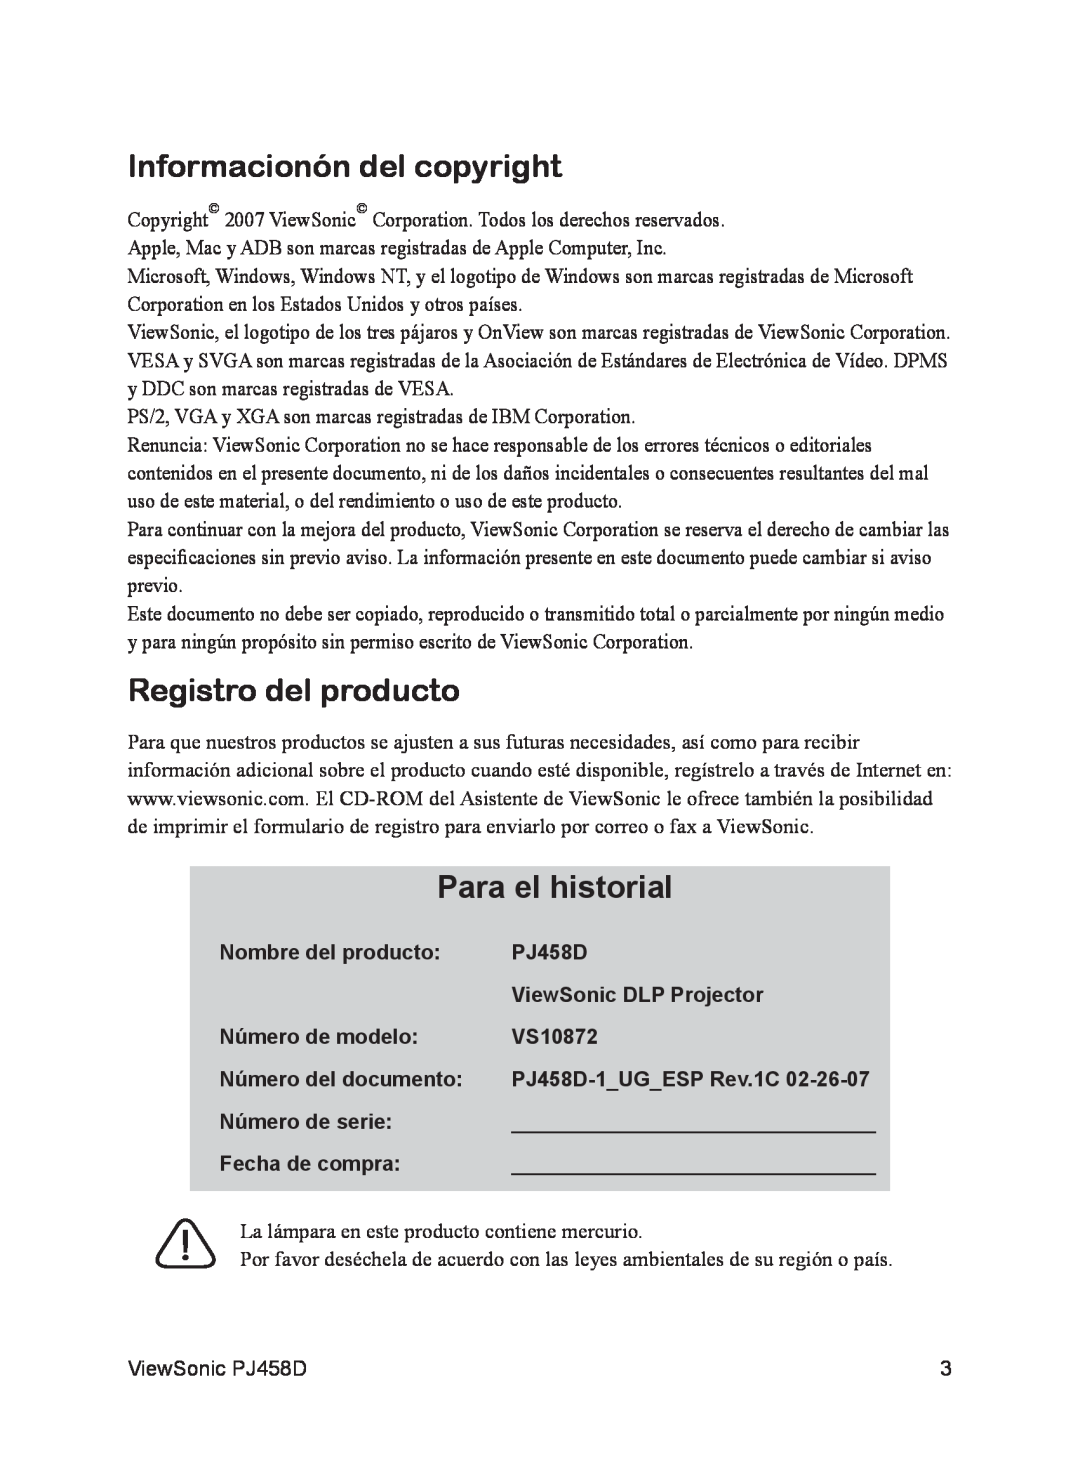 ViewSonic VS10872 manual Informacionón del copyright, Registro del producto, Para el historial, Nombre del producto, PJ458D 